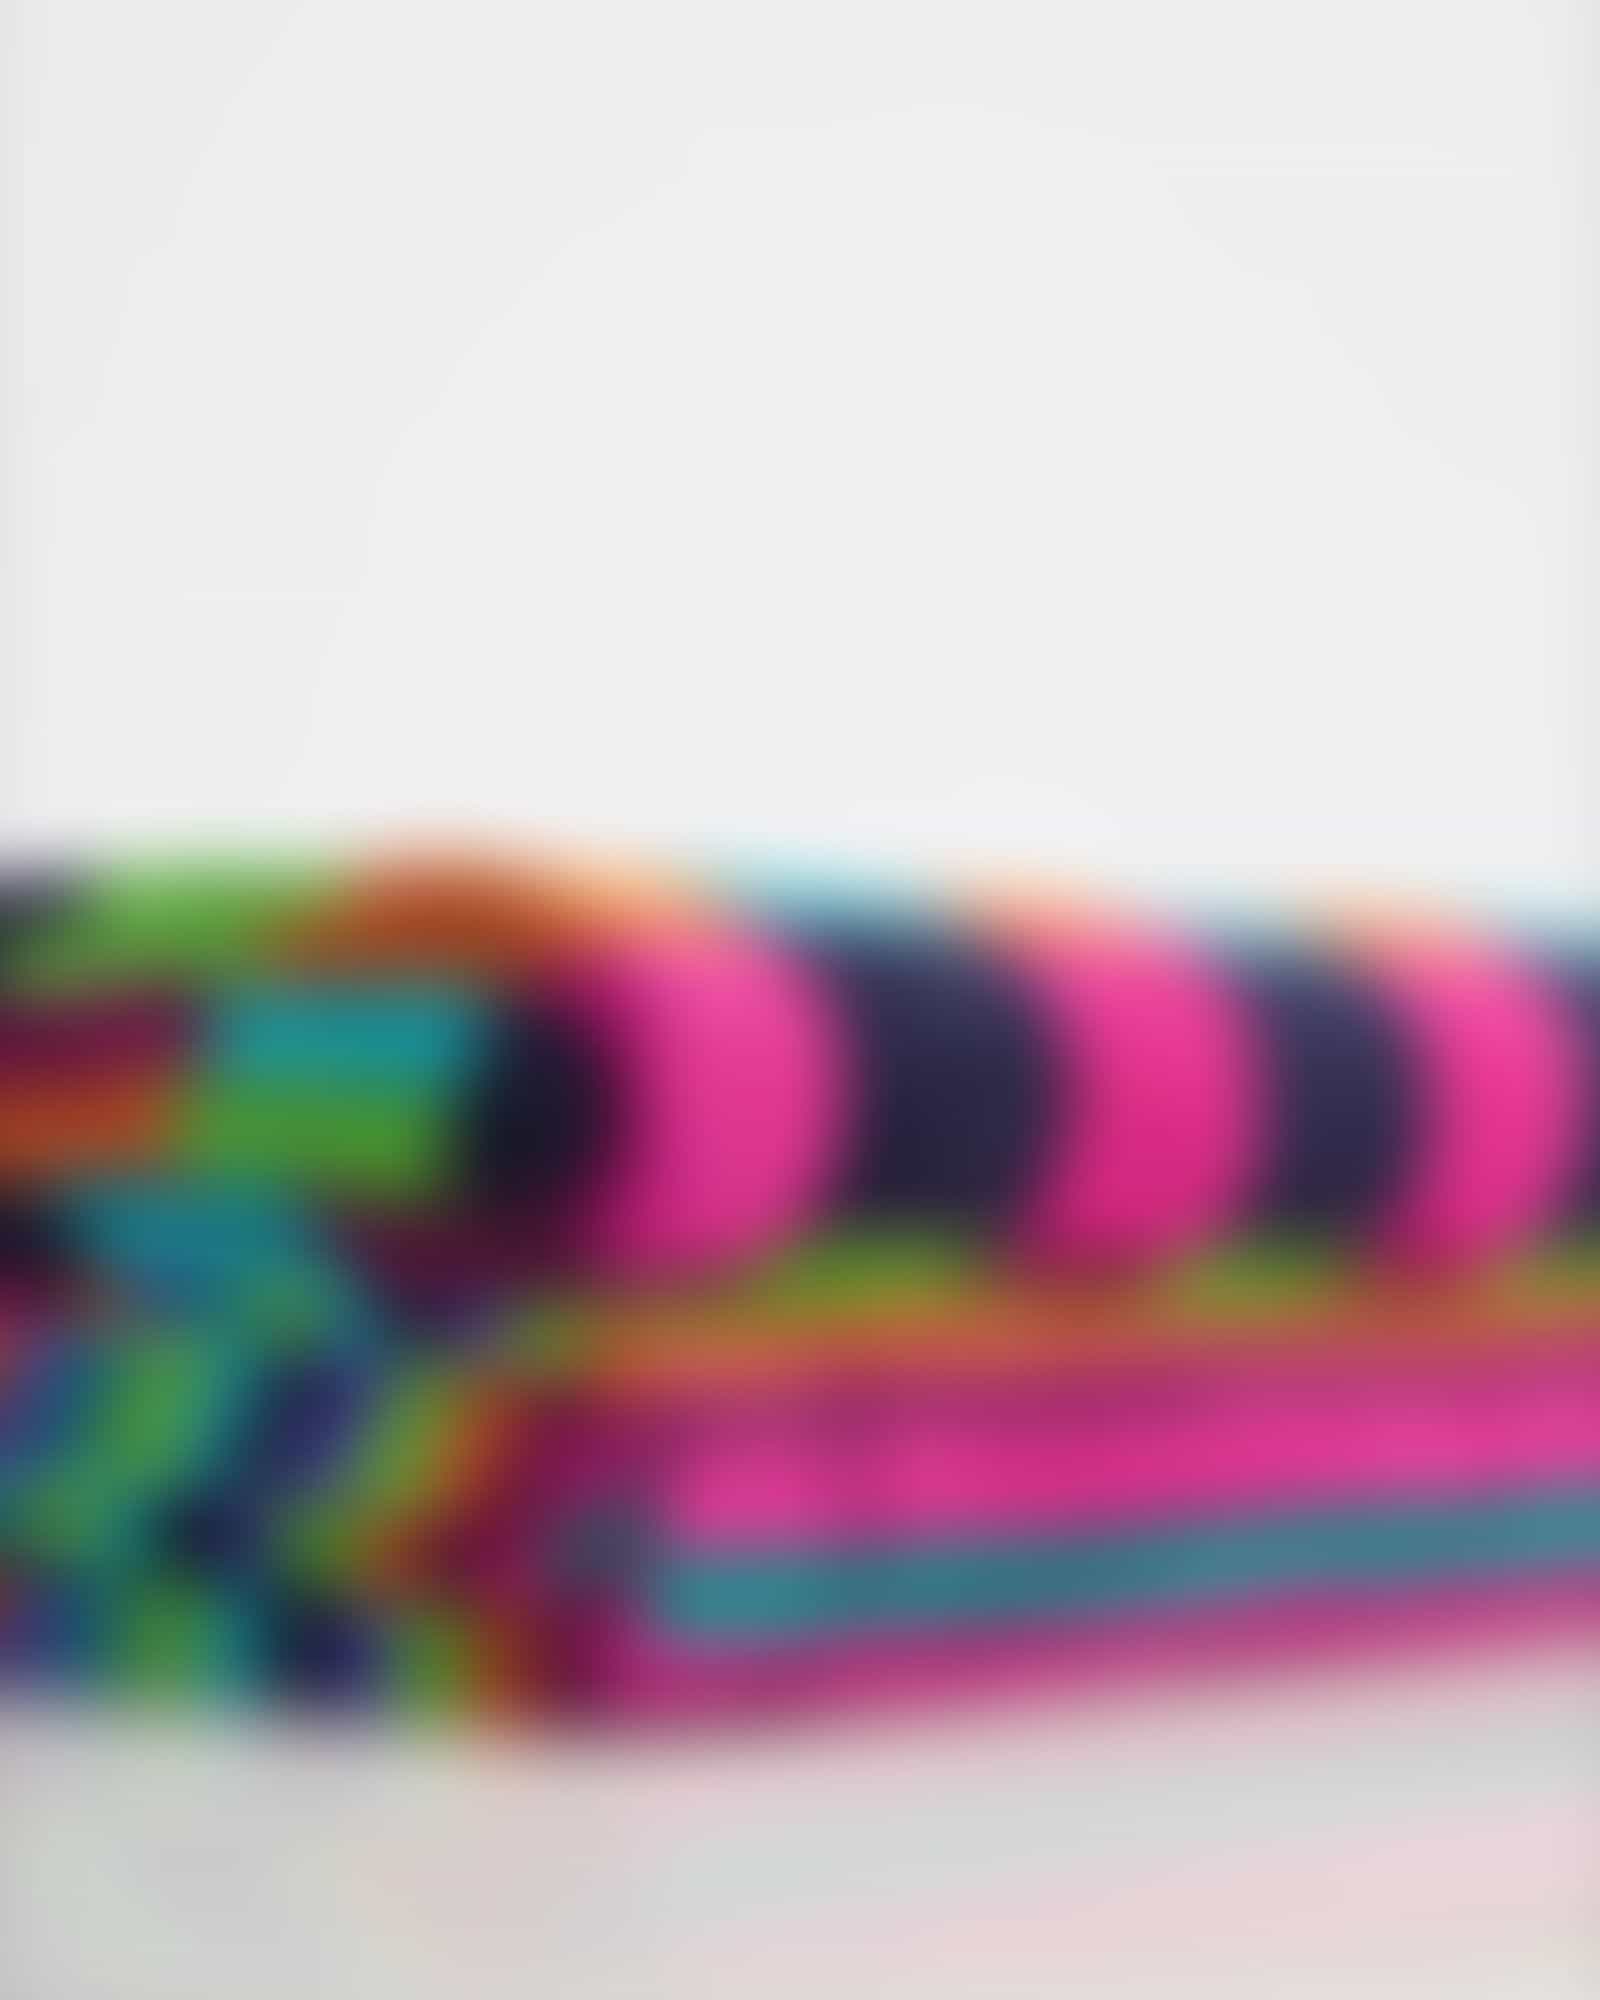 Cawö - Life Style Karo 7047 - Farbe: 84 - multicolor - Handtuch 50x100 cm